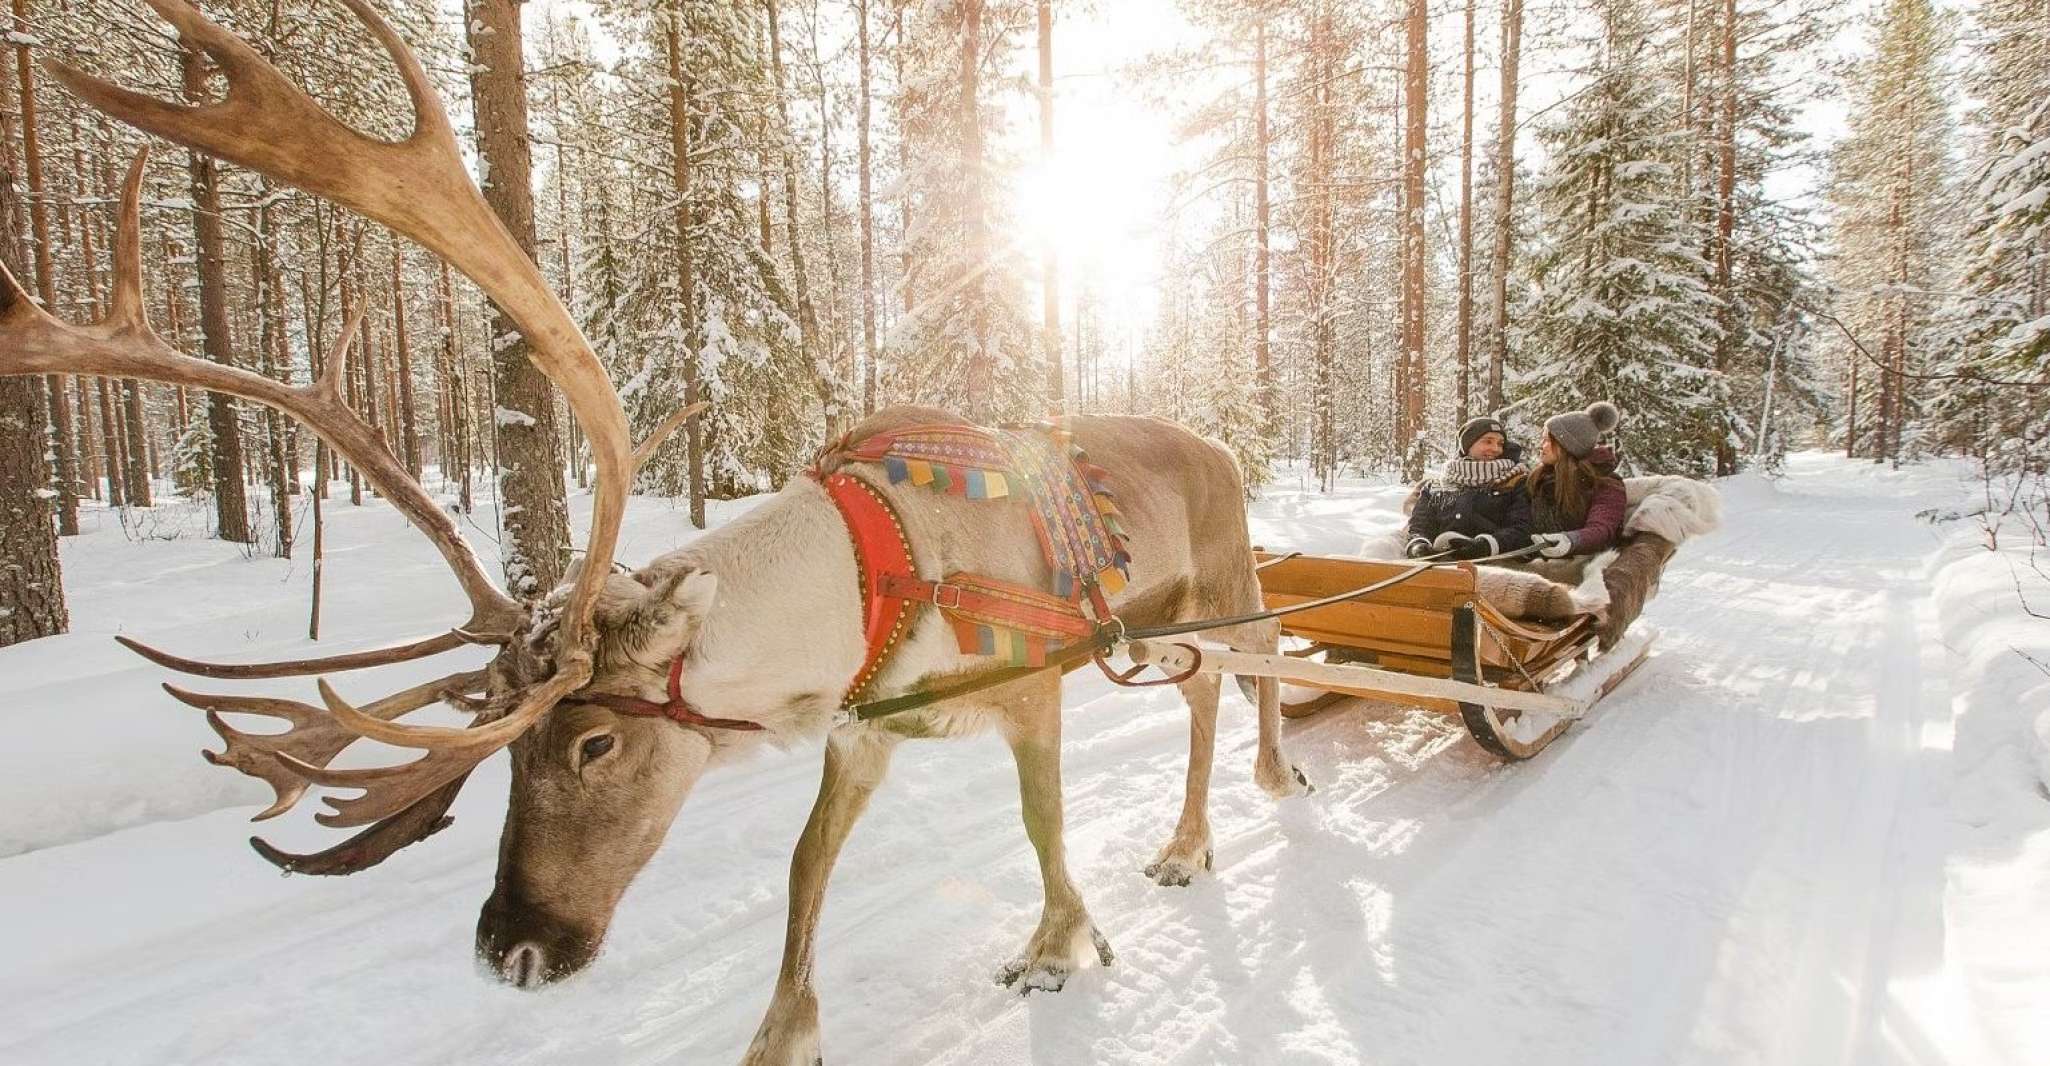 Reindeer Farm Visit with Sleigh Ride - Housity